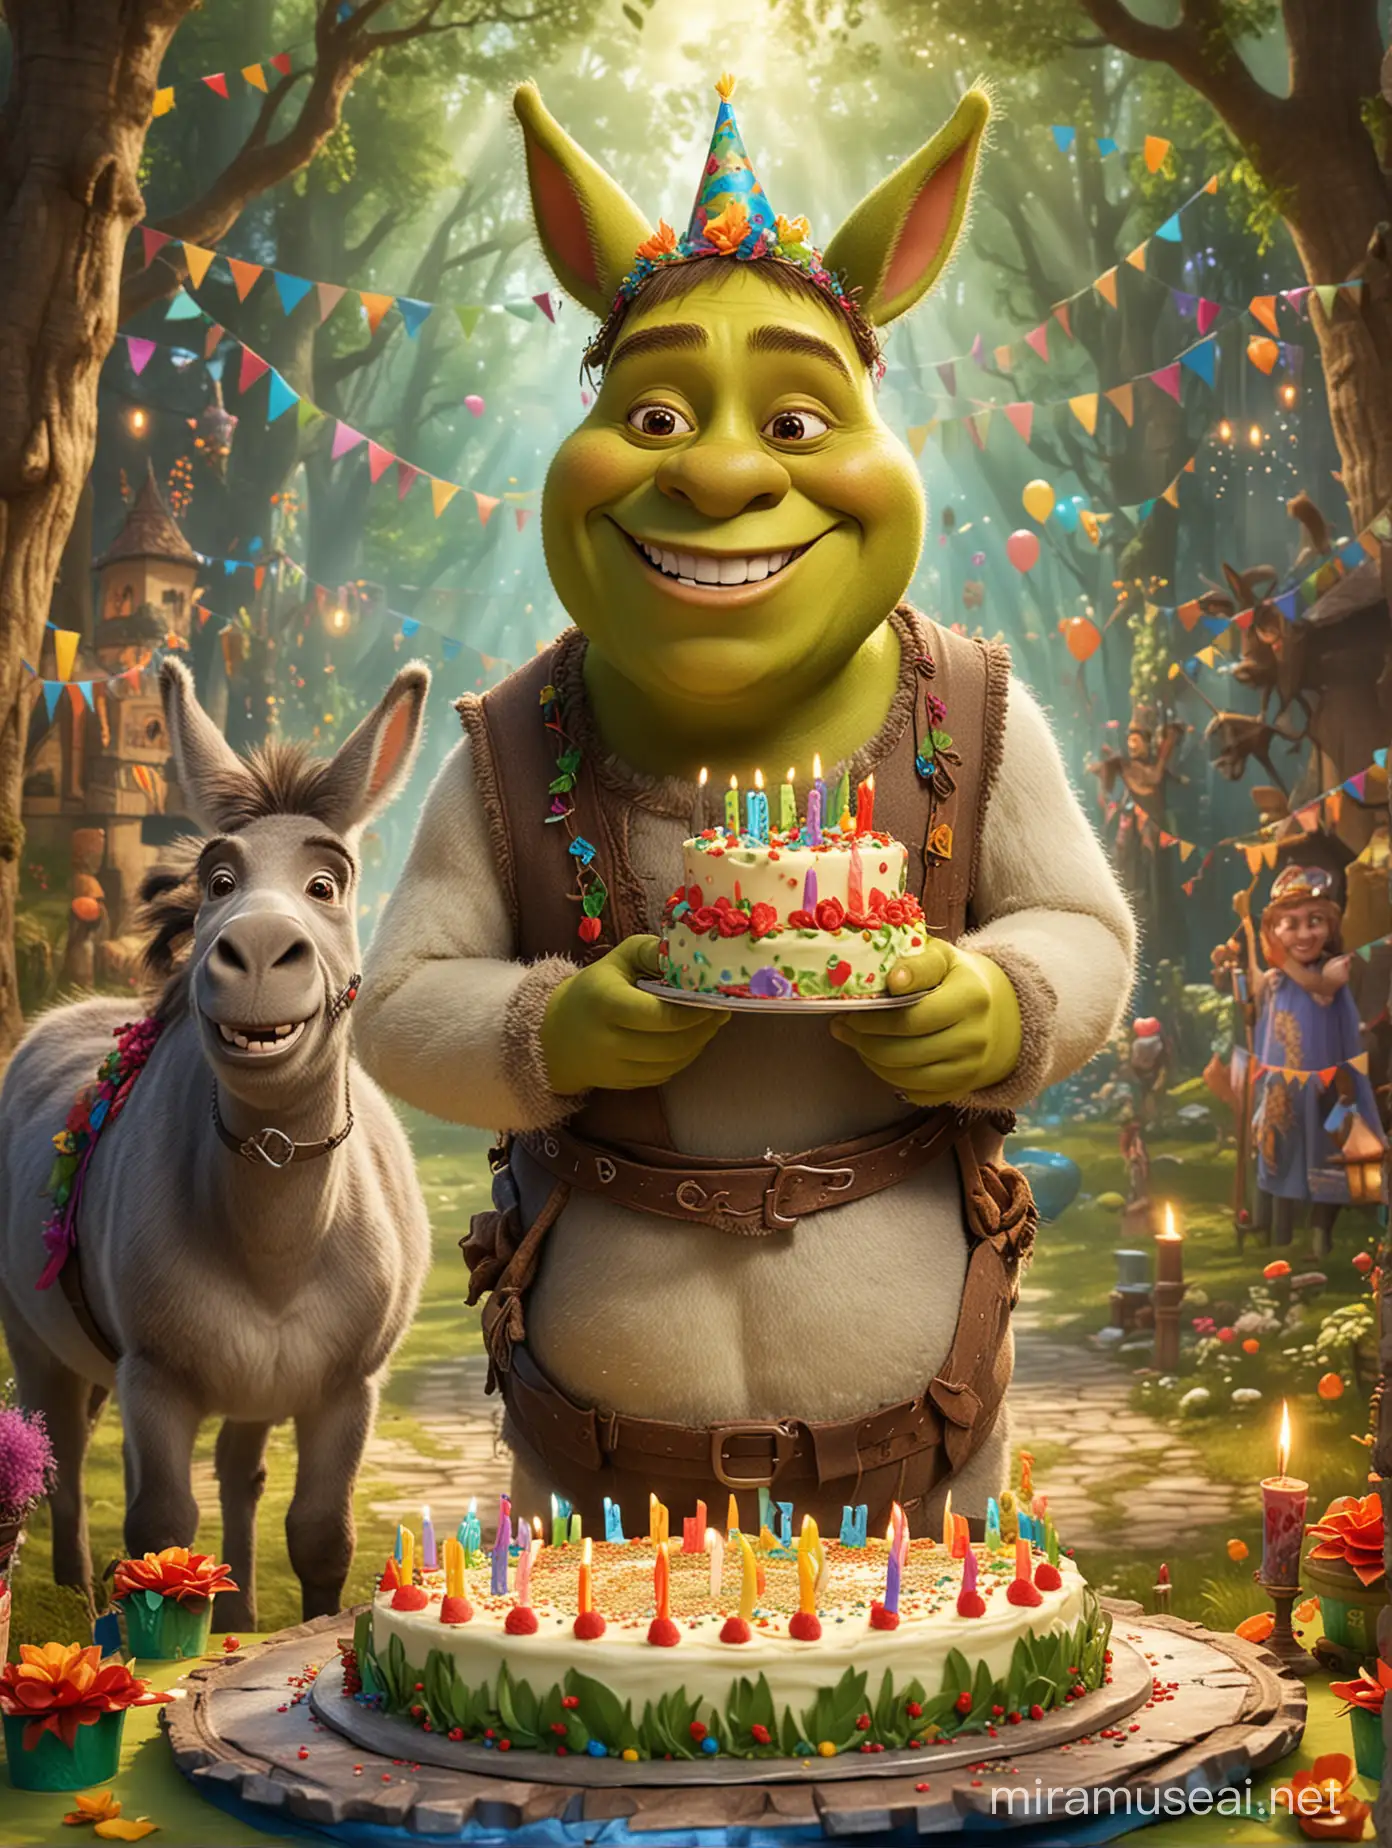 Shrek Birthday Celebration with Donkey Singing in Colorful Forest Setting